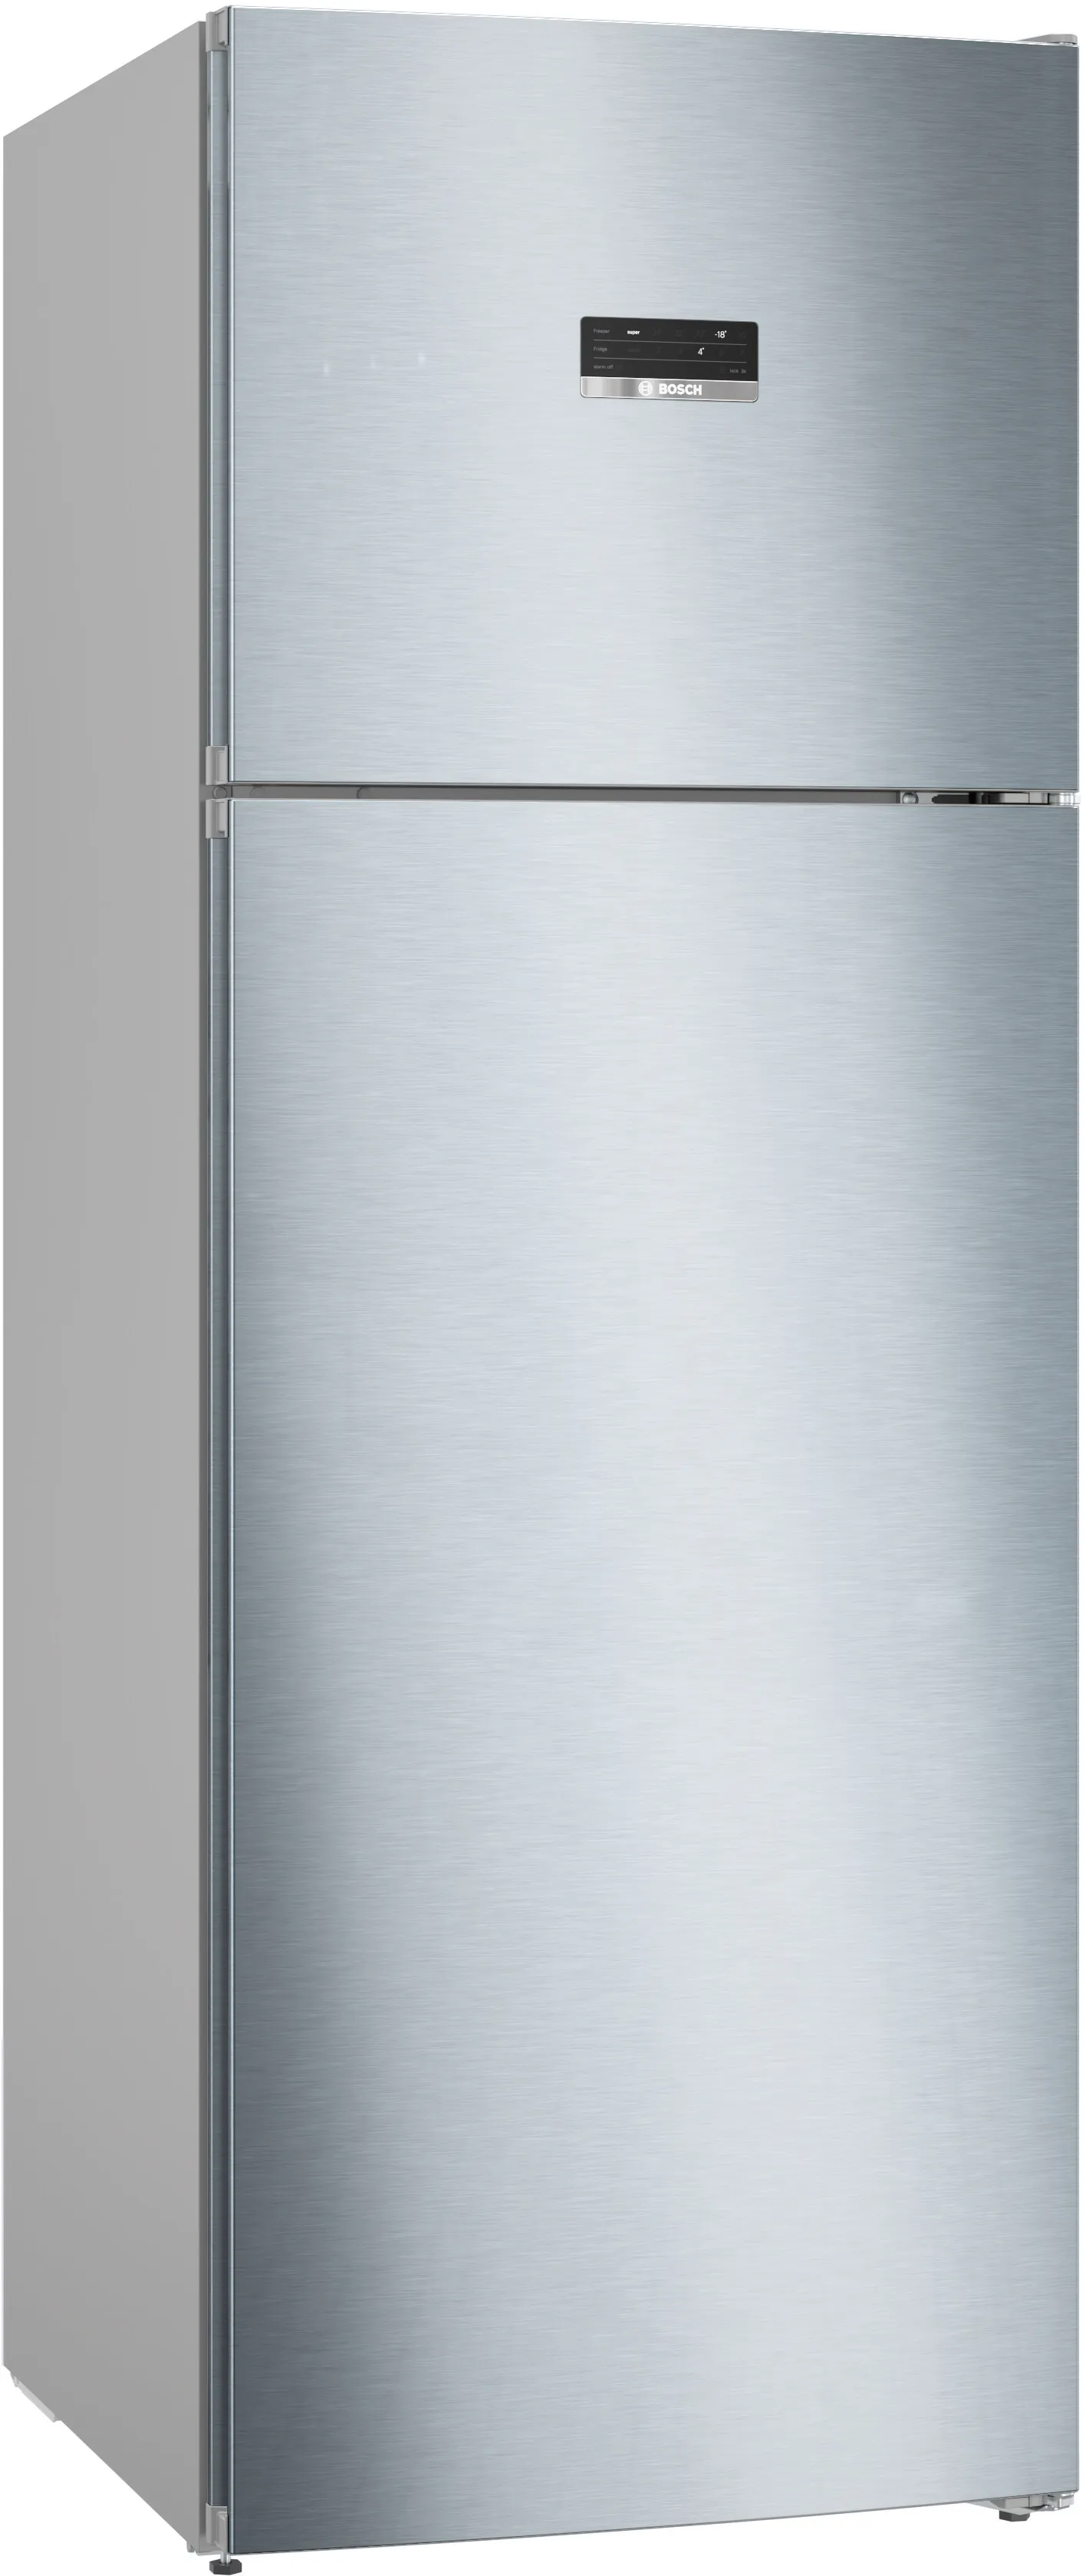 Series 4 free-standing fridge-freezer with freezer at top 193 x 70 cm Brushed steel anti-fingerprint 